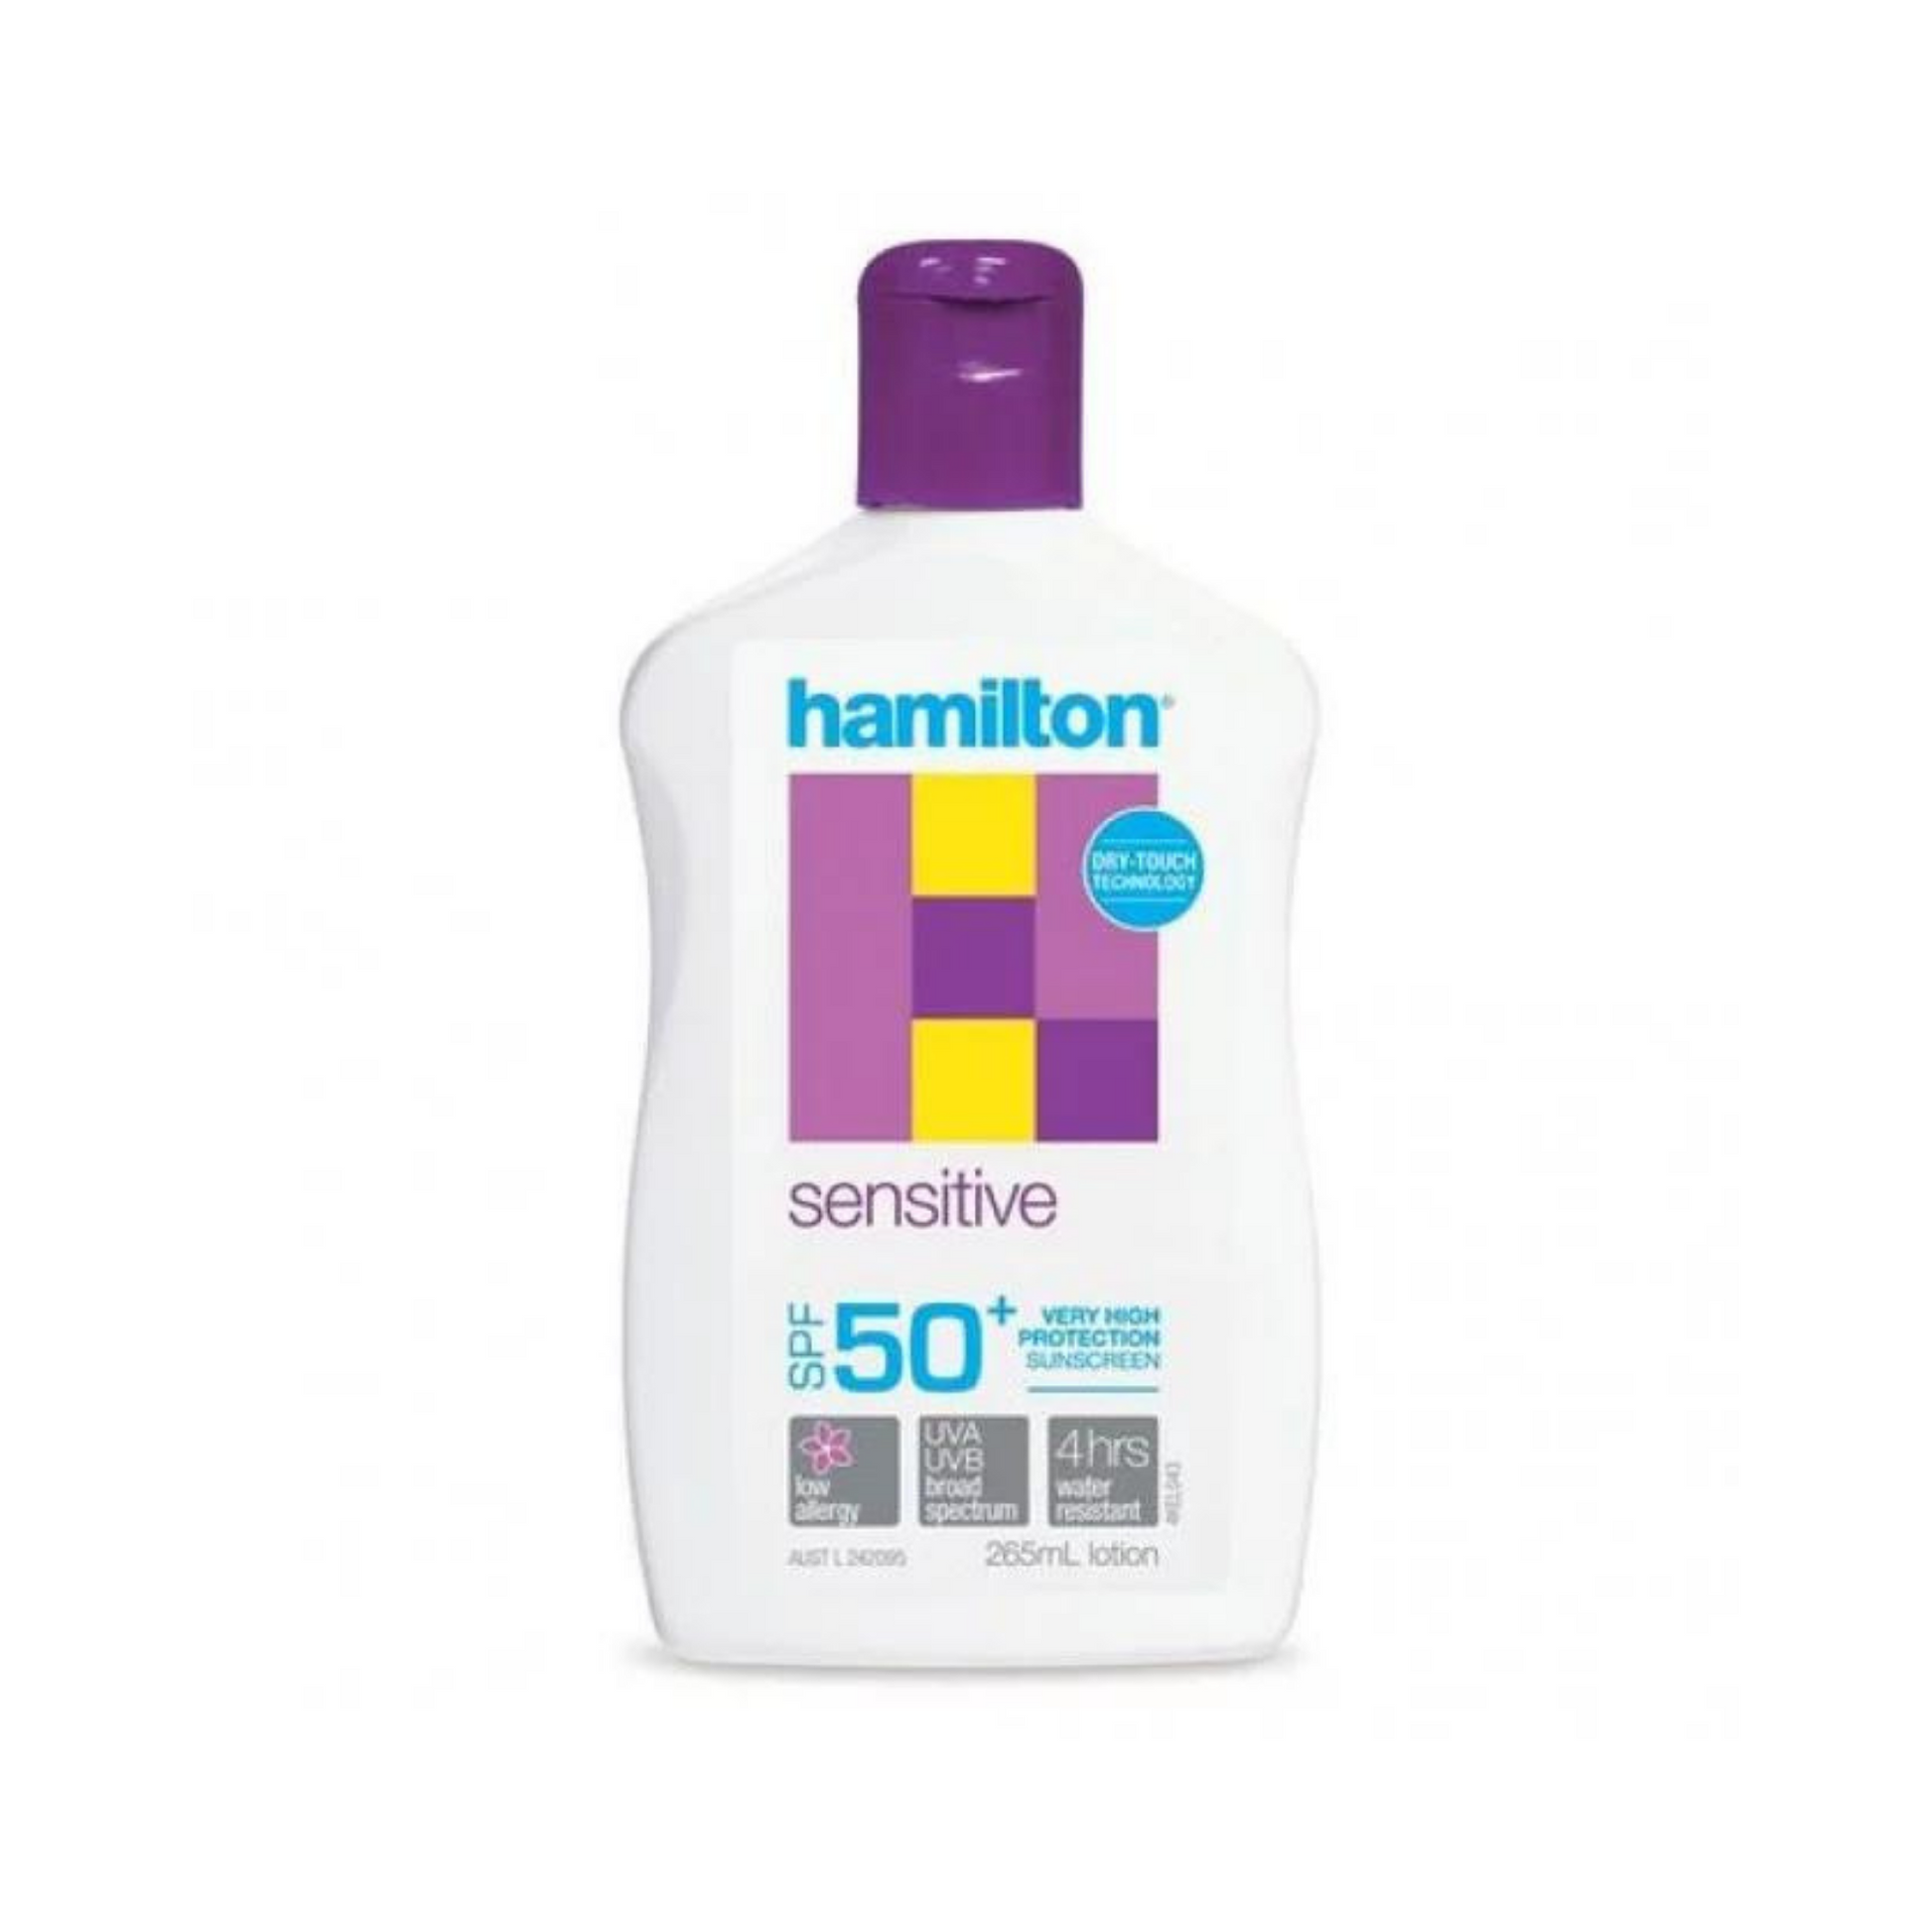 Hamilton Sensitive Sunscreen SPF50+ Lotion 265ml